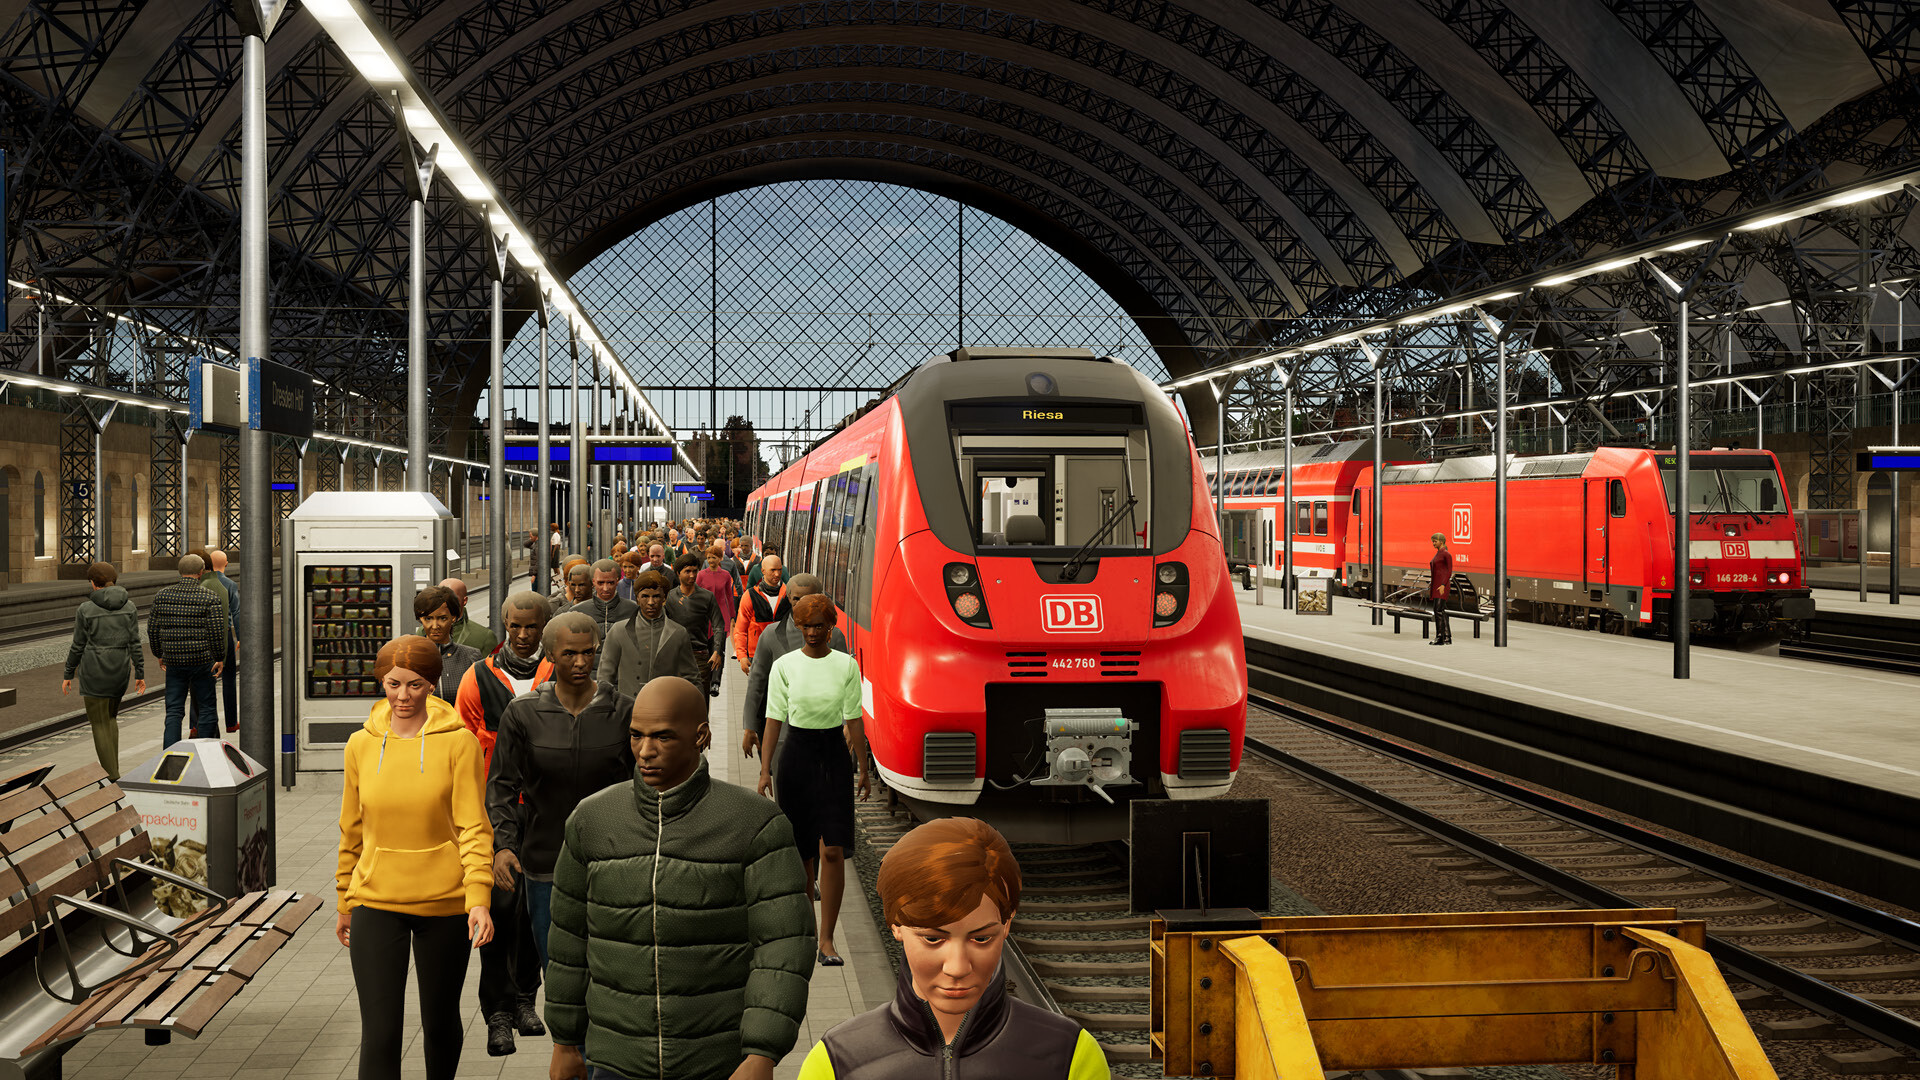 Train Sim World - Nahverkehr Dresden - Riesa Route Add-On DLC Steam CD Key 11.29 $